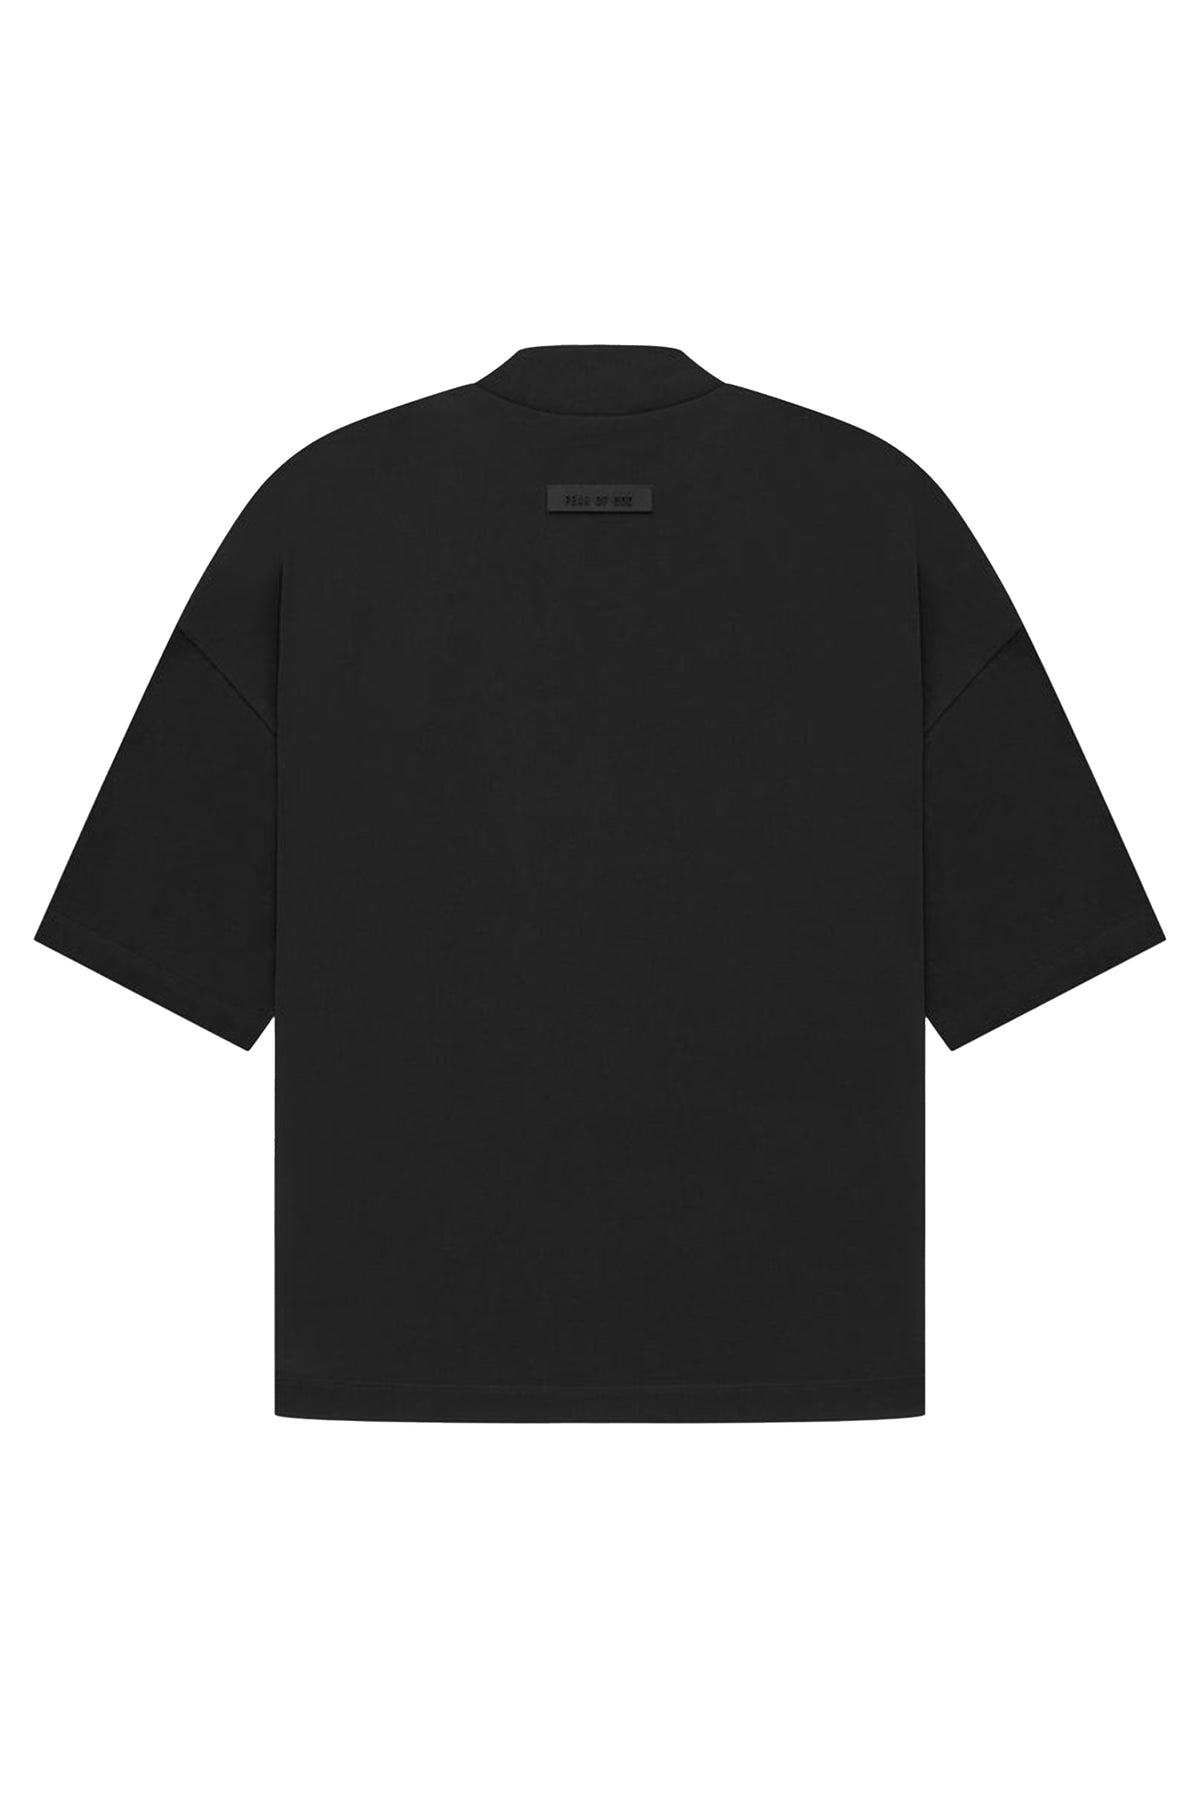 UAE限定 Essentials ロゴ Tシャツ Dusty Beige M